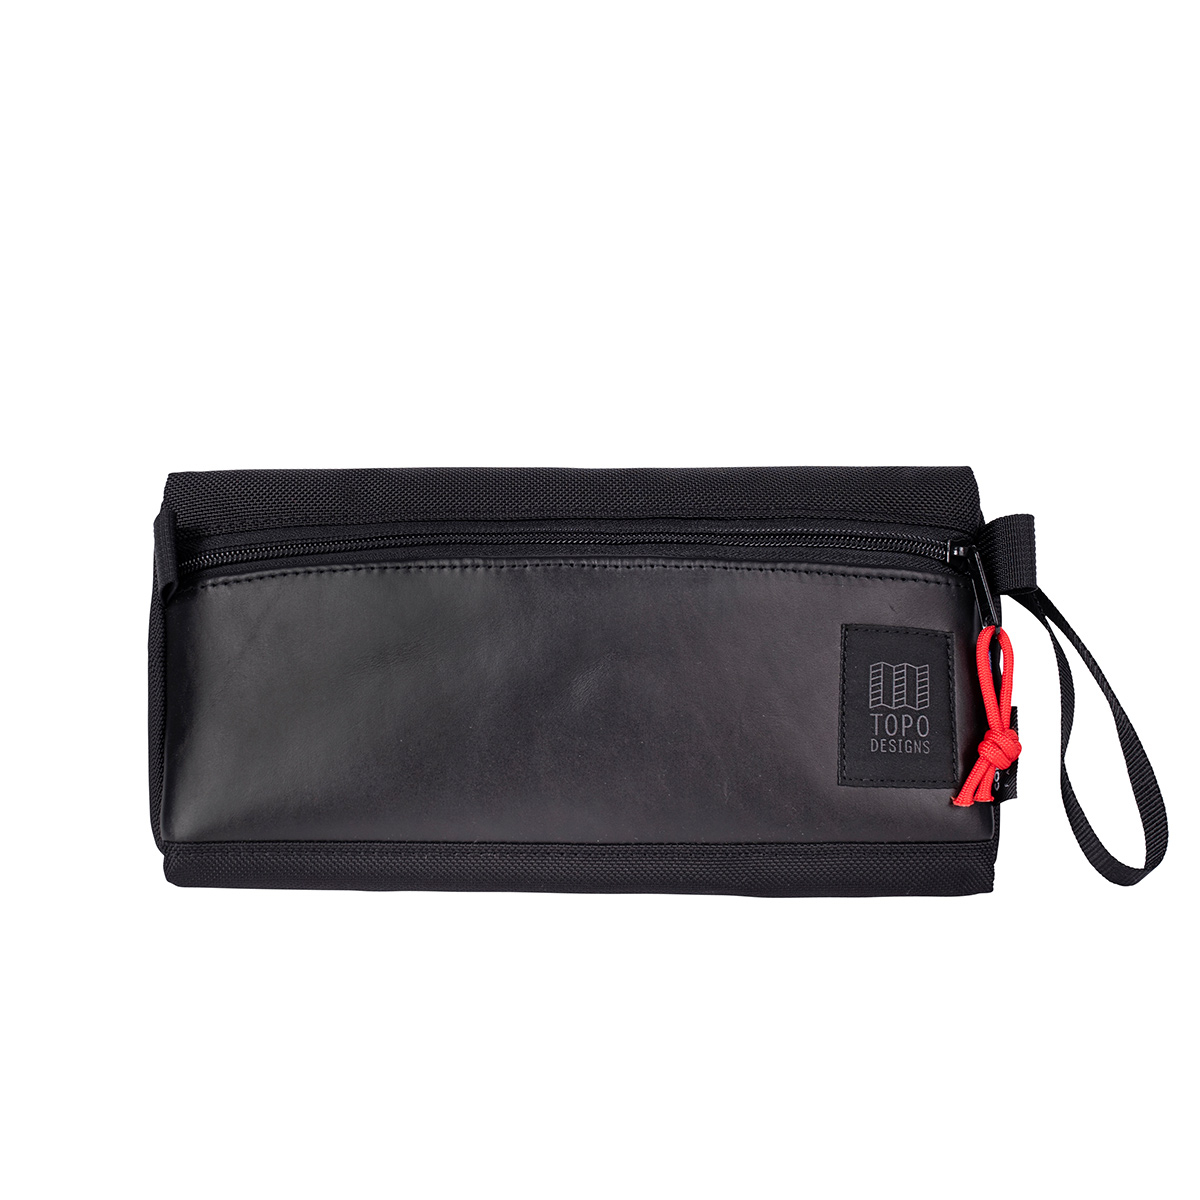 Topo Designs Dopp Kit Ballistic Black/Black Leather, water-resistant, travel light, accessory bag